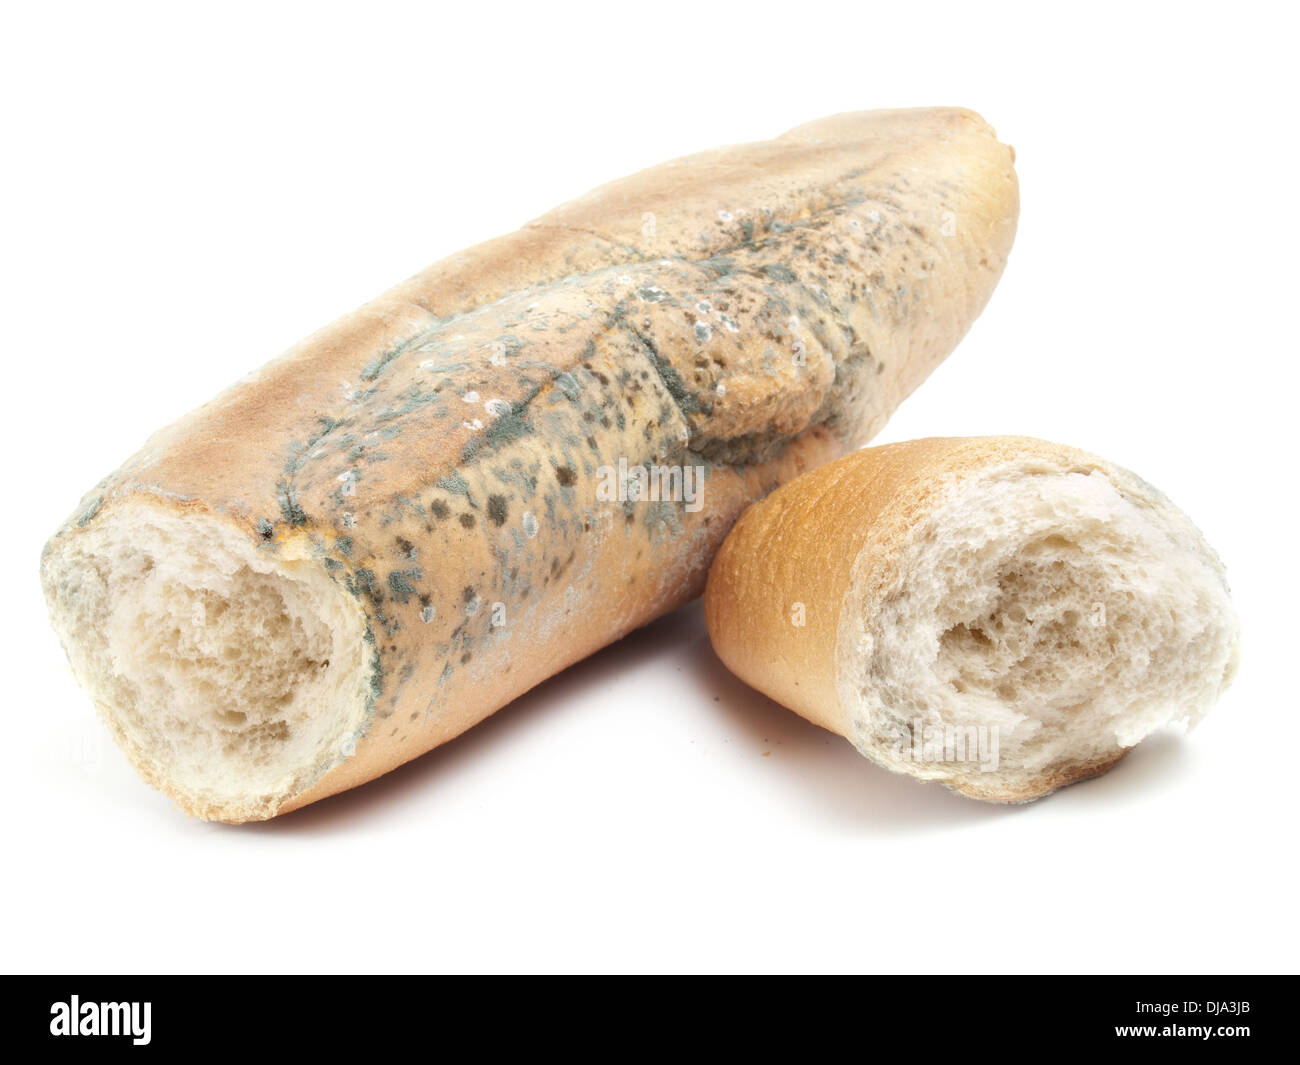 https://c8.alamy.com/comp/DJA3JB/two-parts-of-an-old-mold-bread-on-a-white-background-DJA3JB.jpg